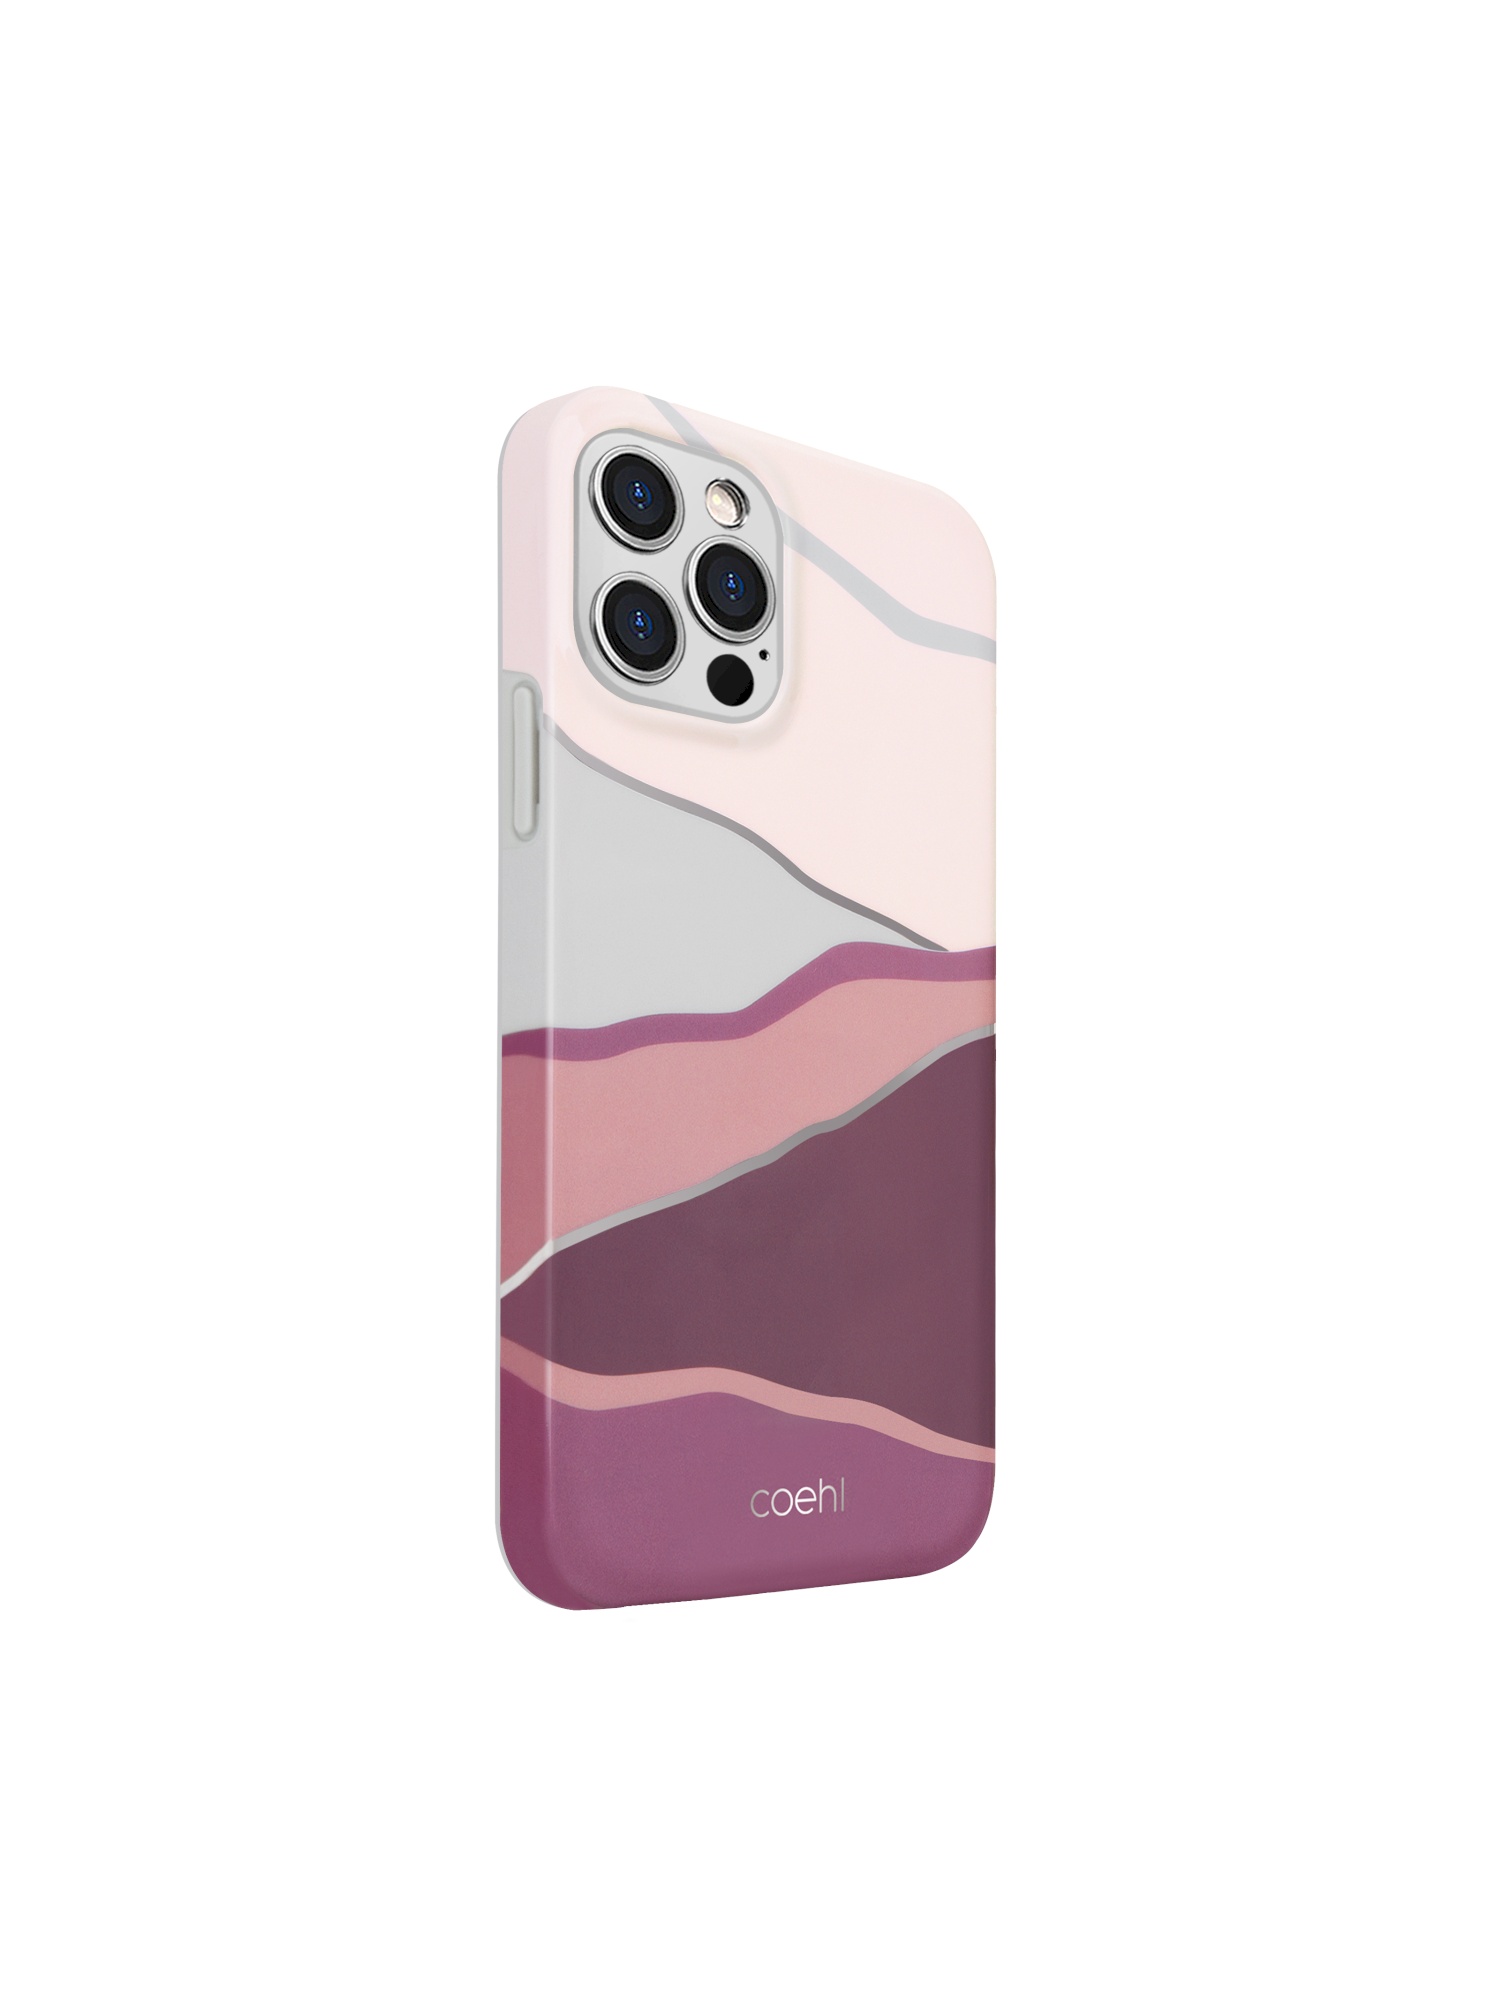 iPhone 12/12 Pro, case coehl ciel sunset pink, pink